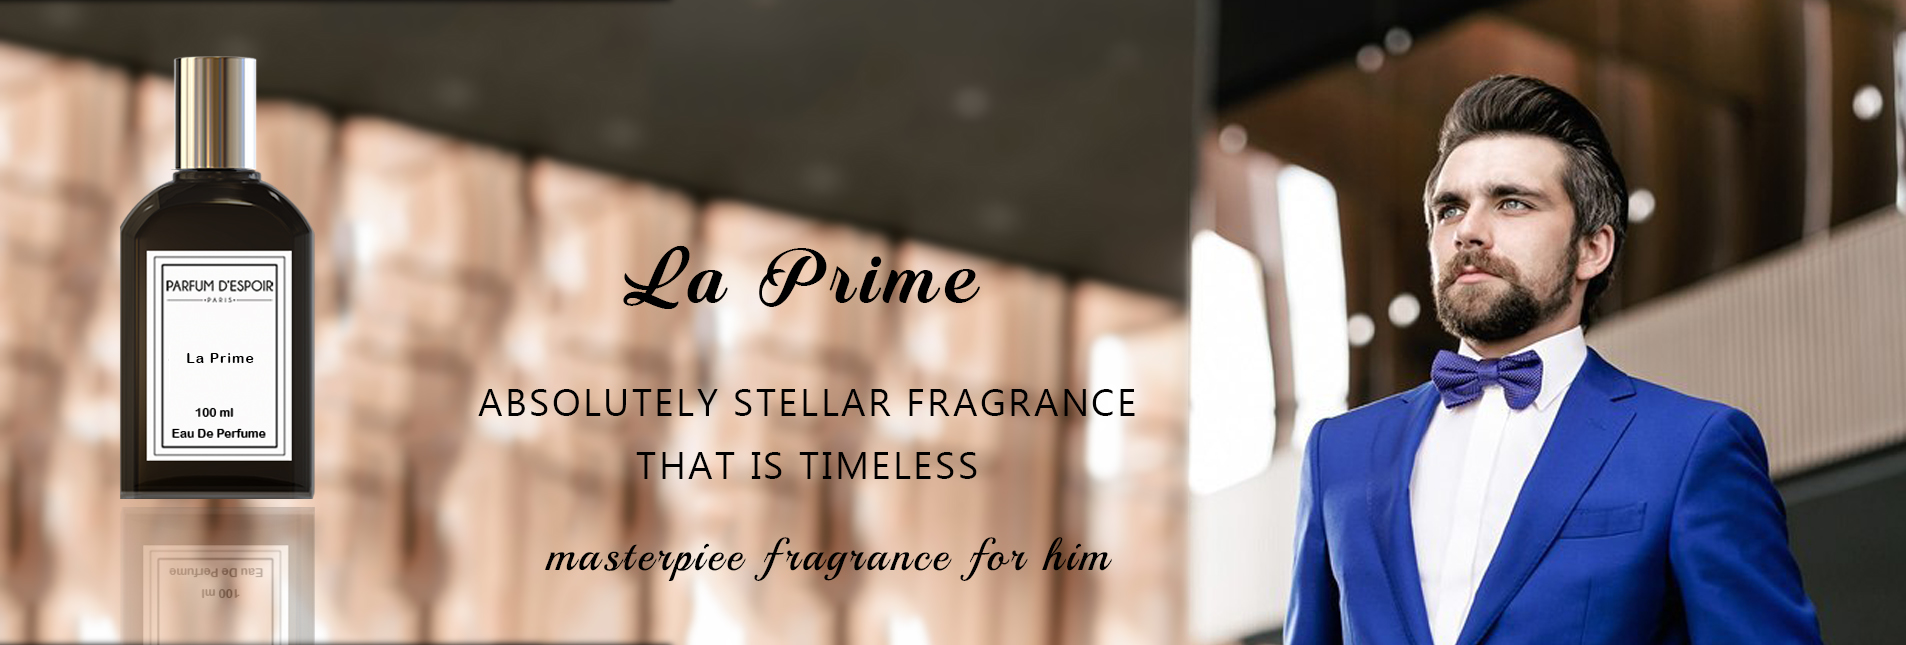 La Prime - oriental spicy sweet perfume - Parfum D'espoir - France